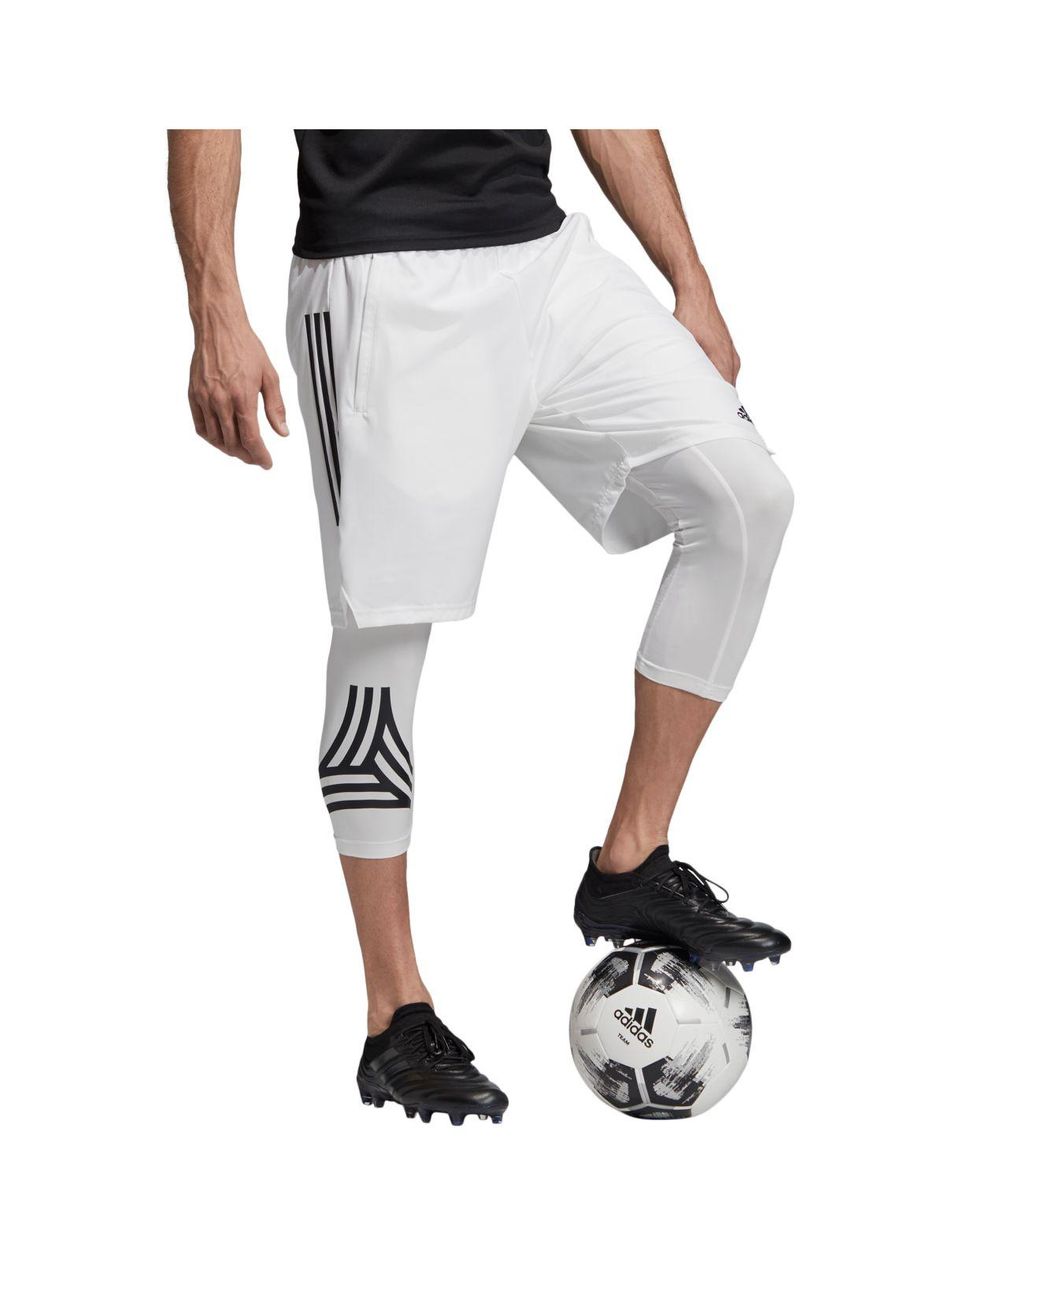 What Should I Wear Under Soccer Shorts?